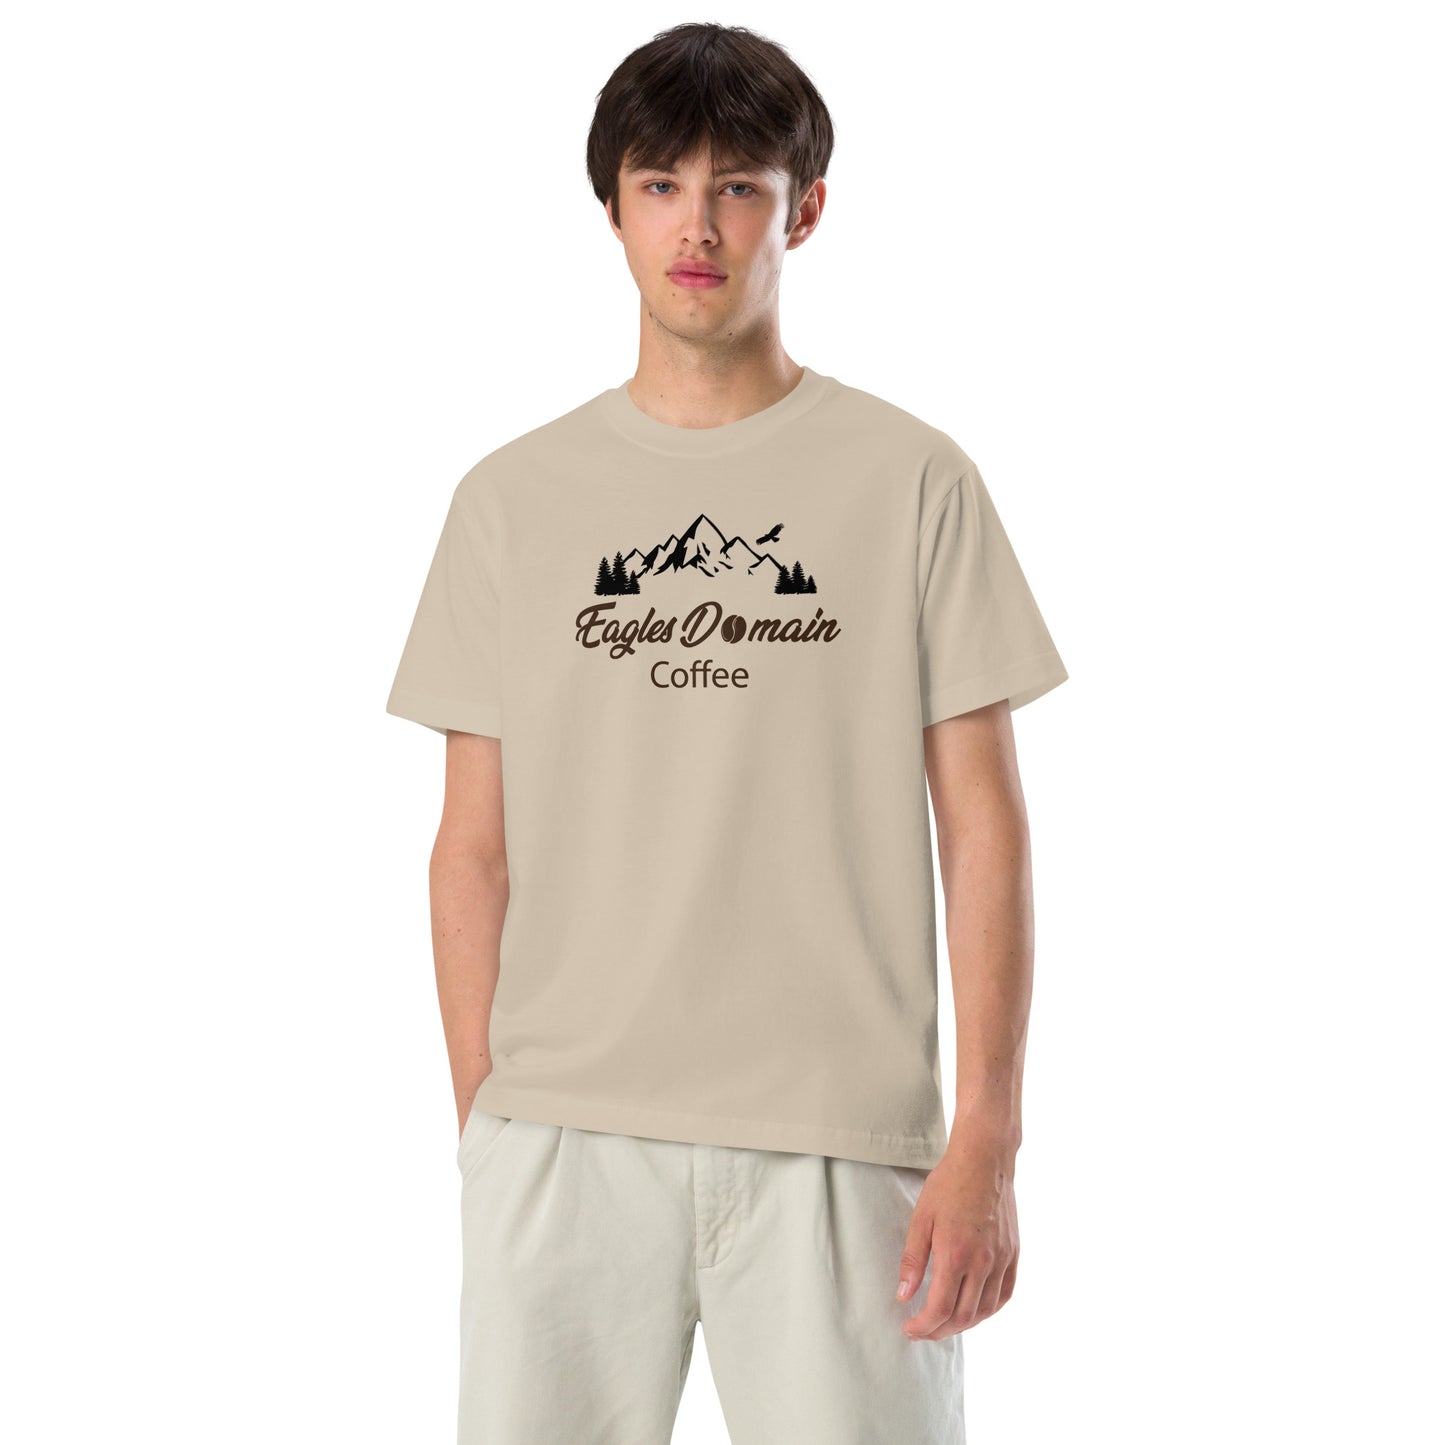 Eagles Domain Coffee Organic Cotton T-Shirt - Eagles Domain Coffee